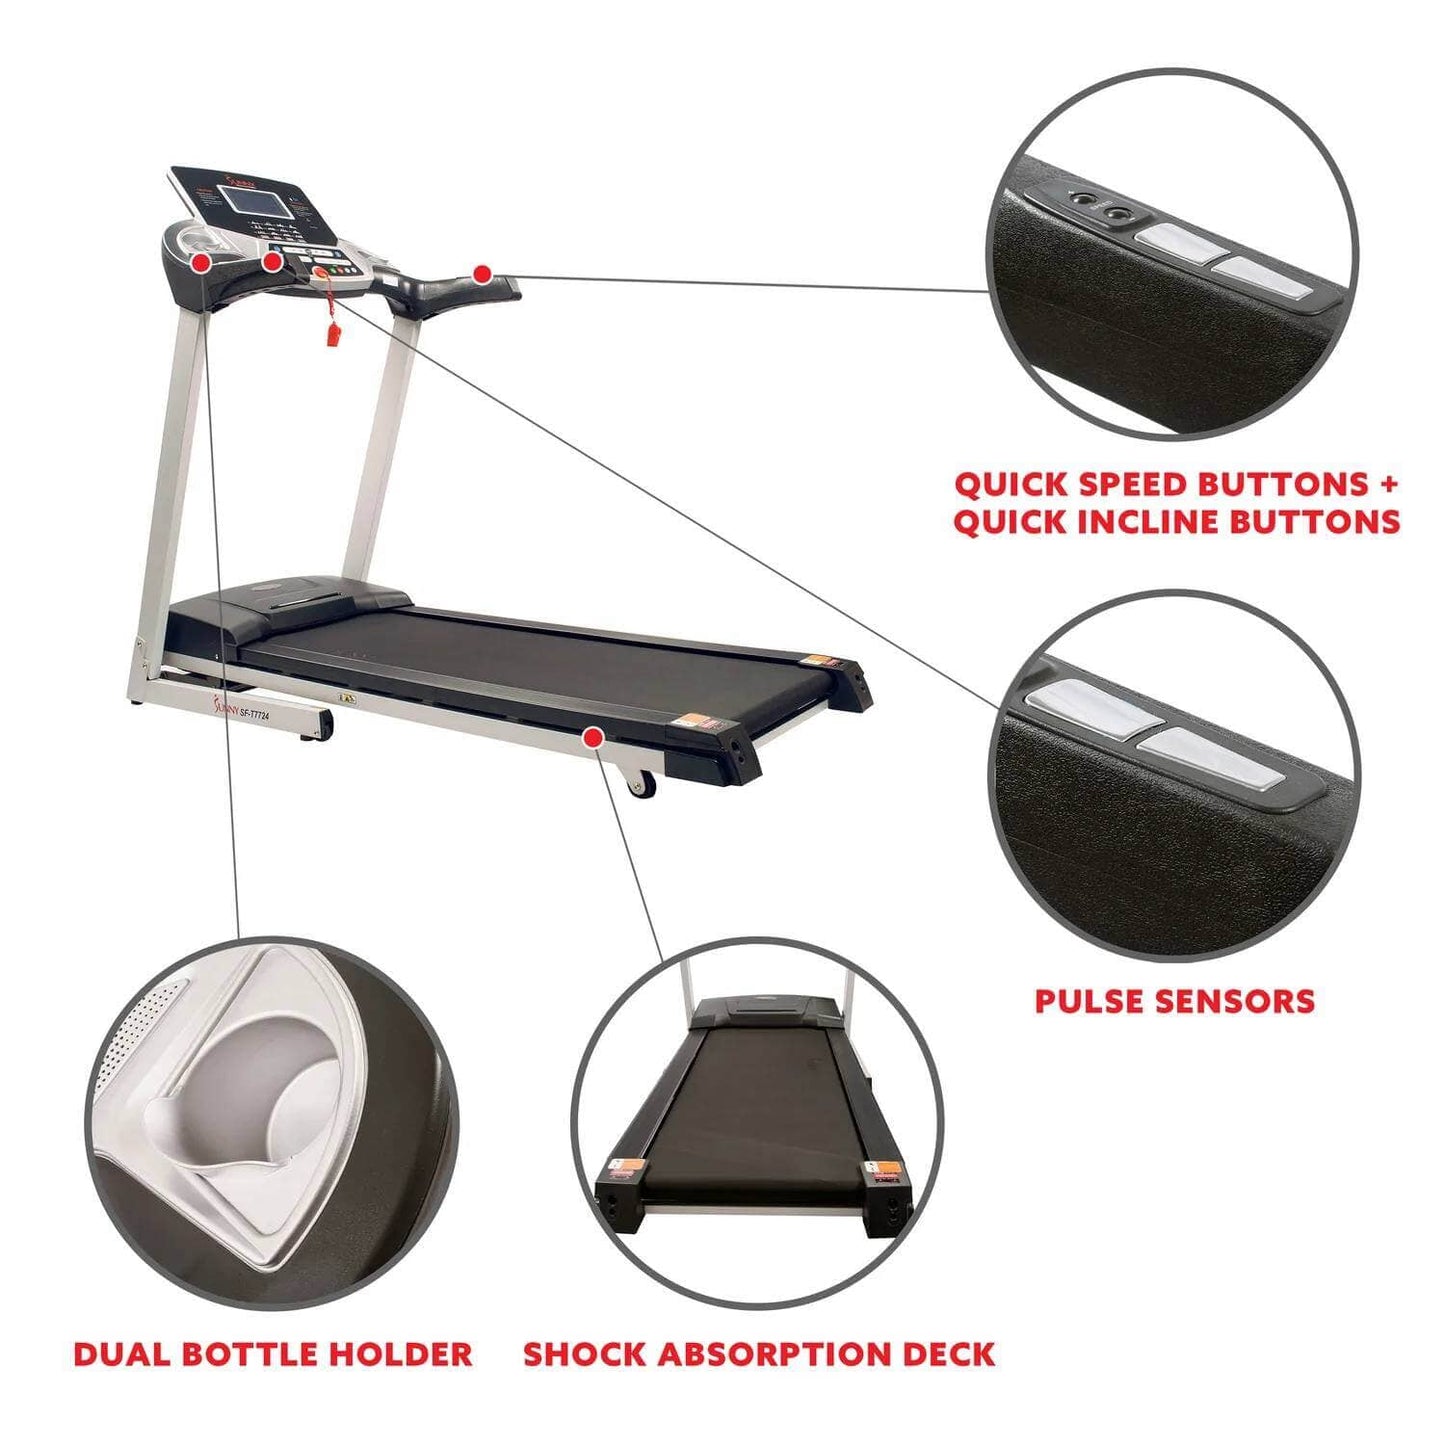 Sunny Health & Fitness Energy Flex Treadmill-Advanced Cardio Machine-Indoor Running-Multi-Color-Compact